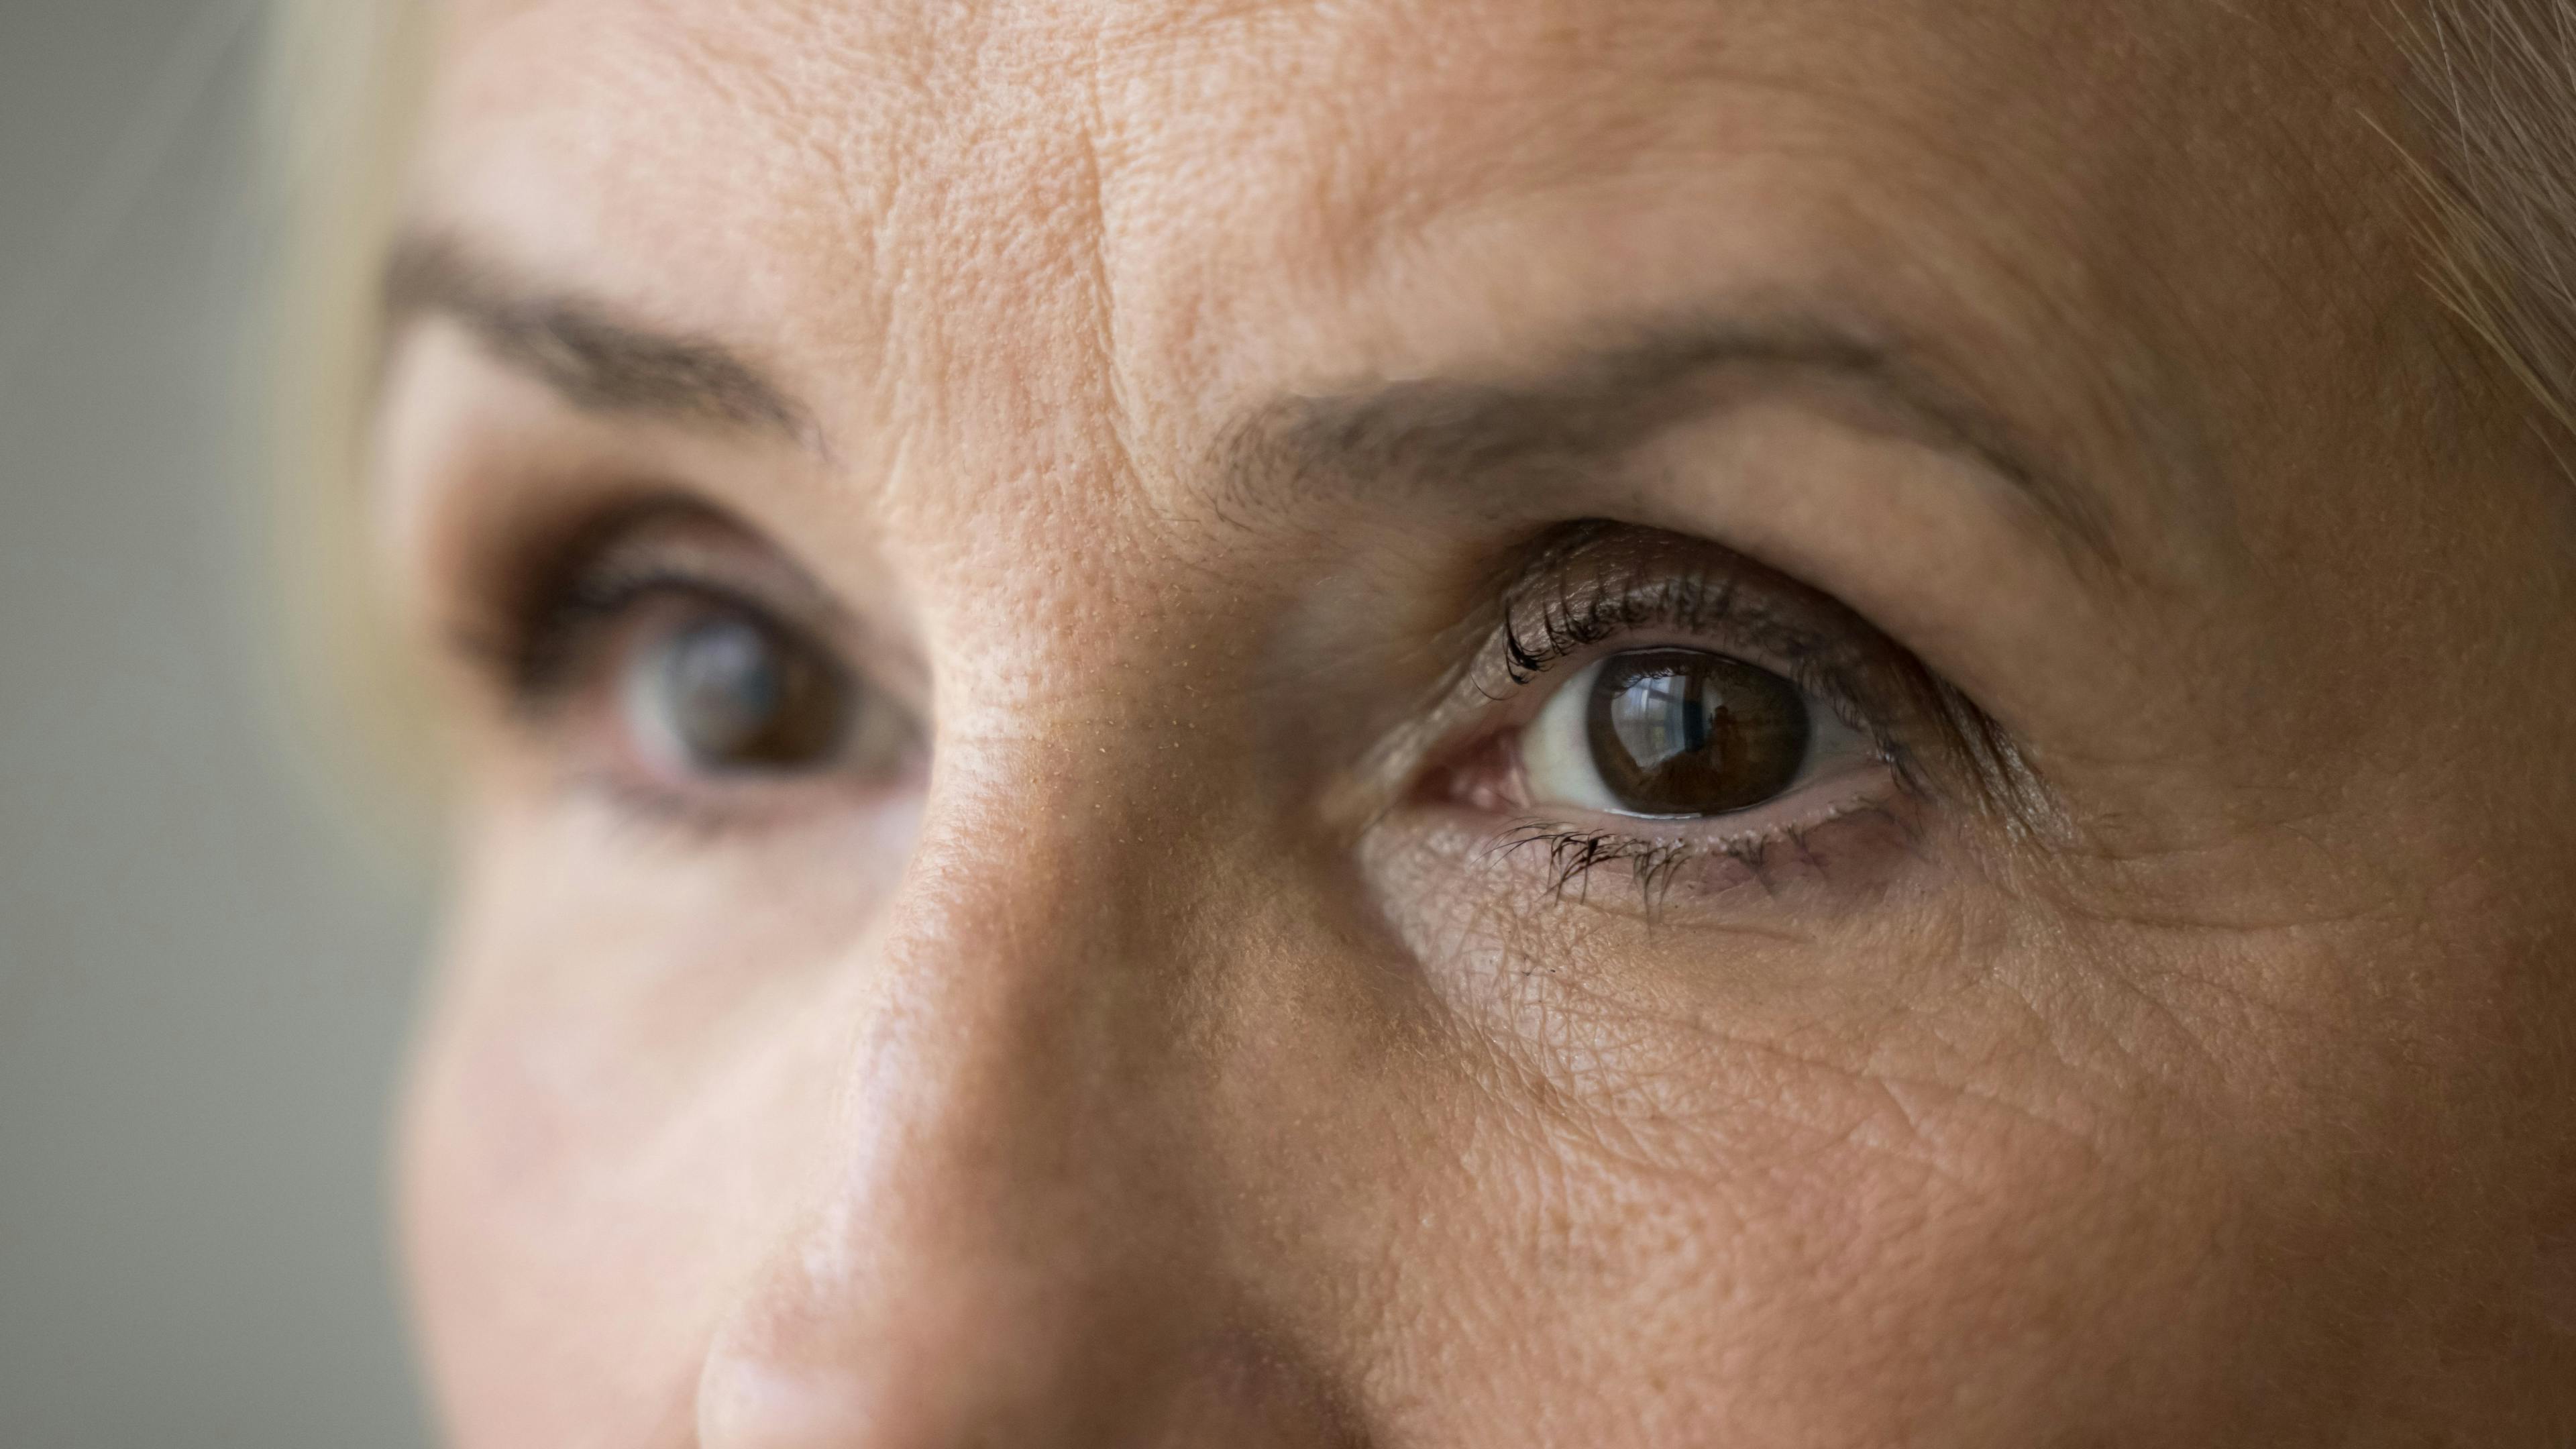 Brown eyes of older senior woman with black mascara on eyelashes looking away | Image credit: fizkes - stock.adobe.com